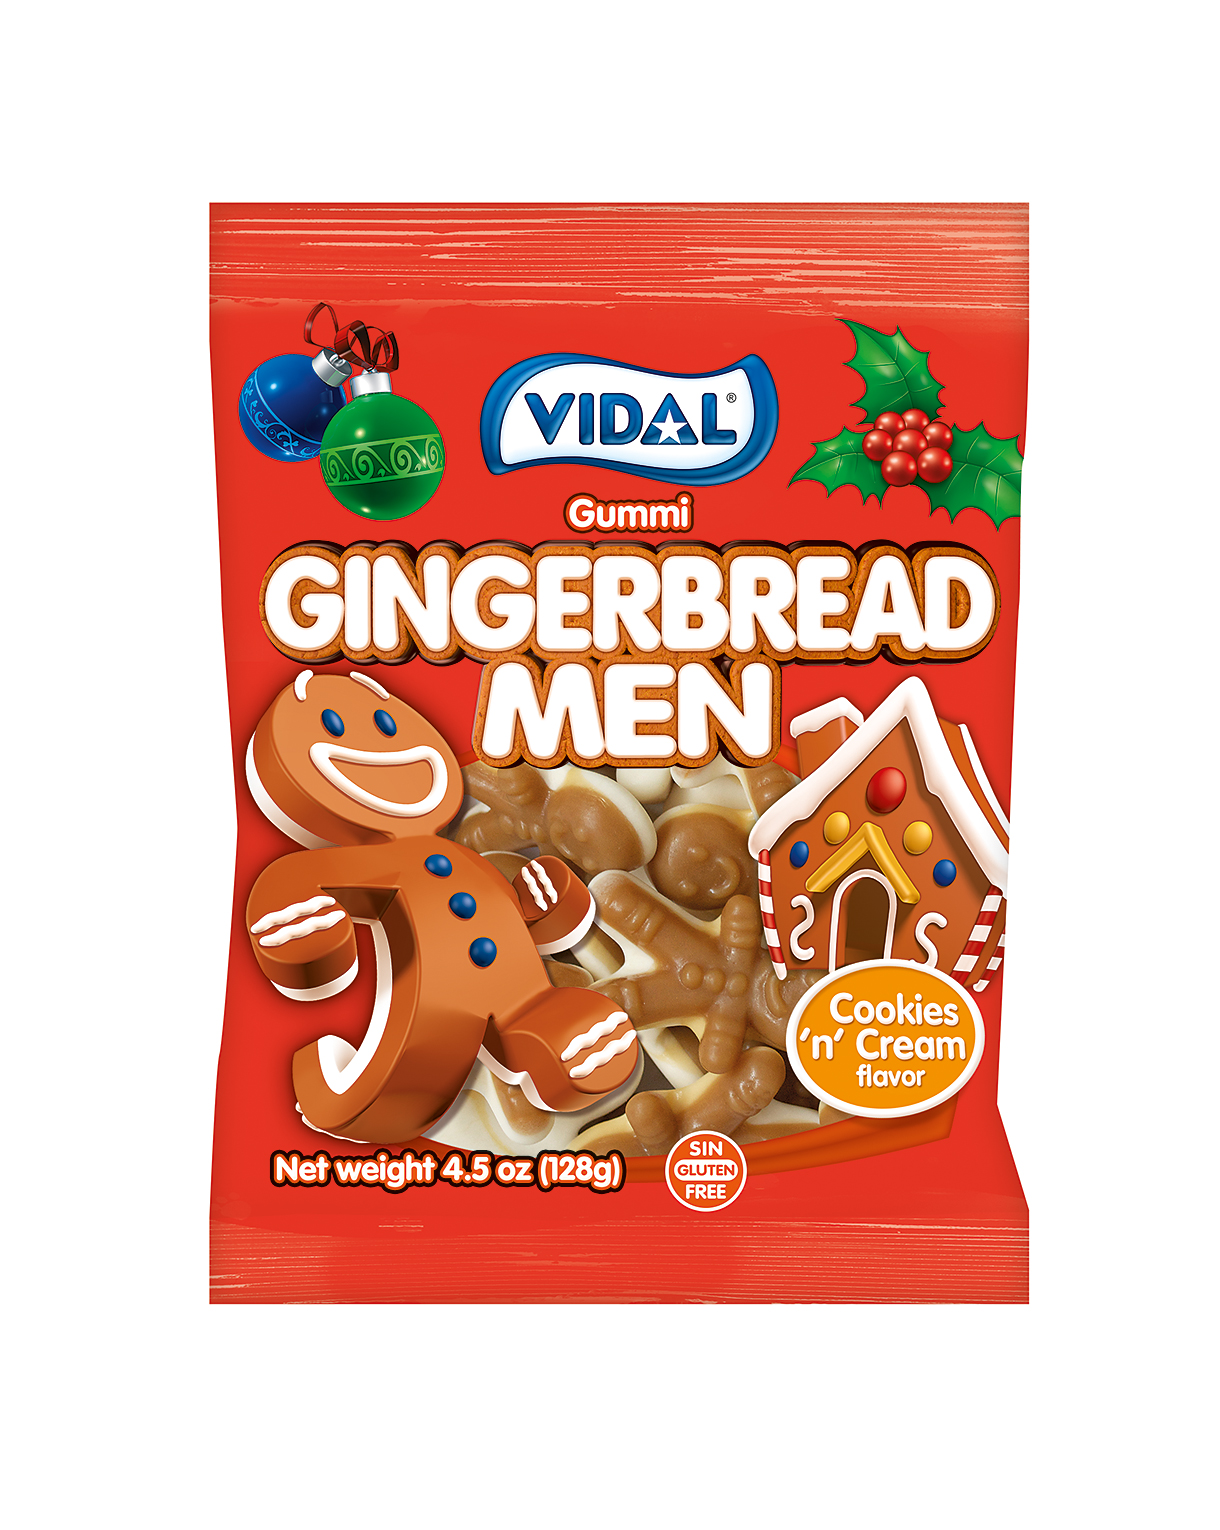 Gummi Gingerbread Men by Vidal Candies USA